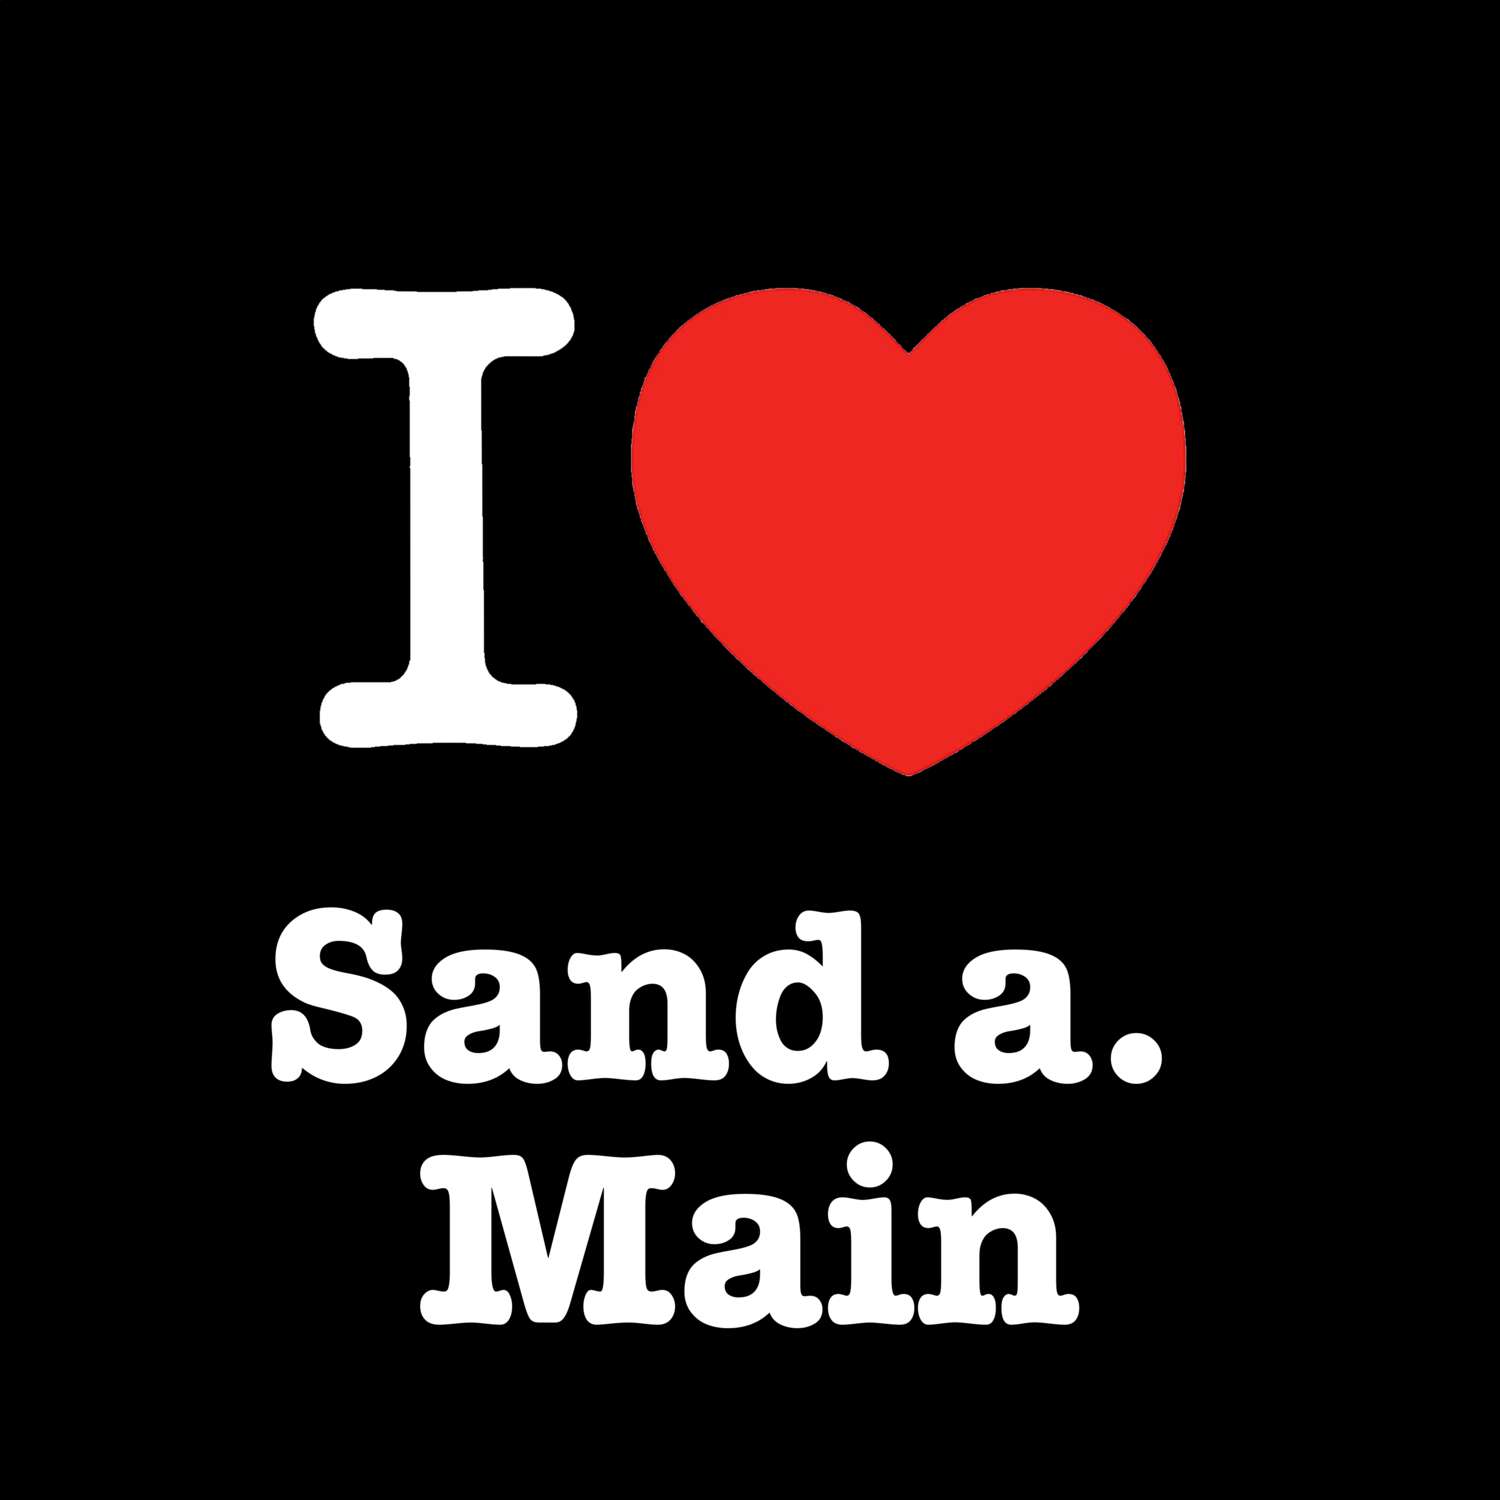 Sand a. Main T-Shirt »I love«